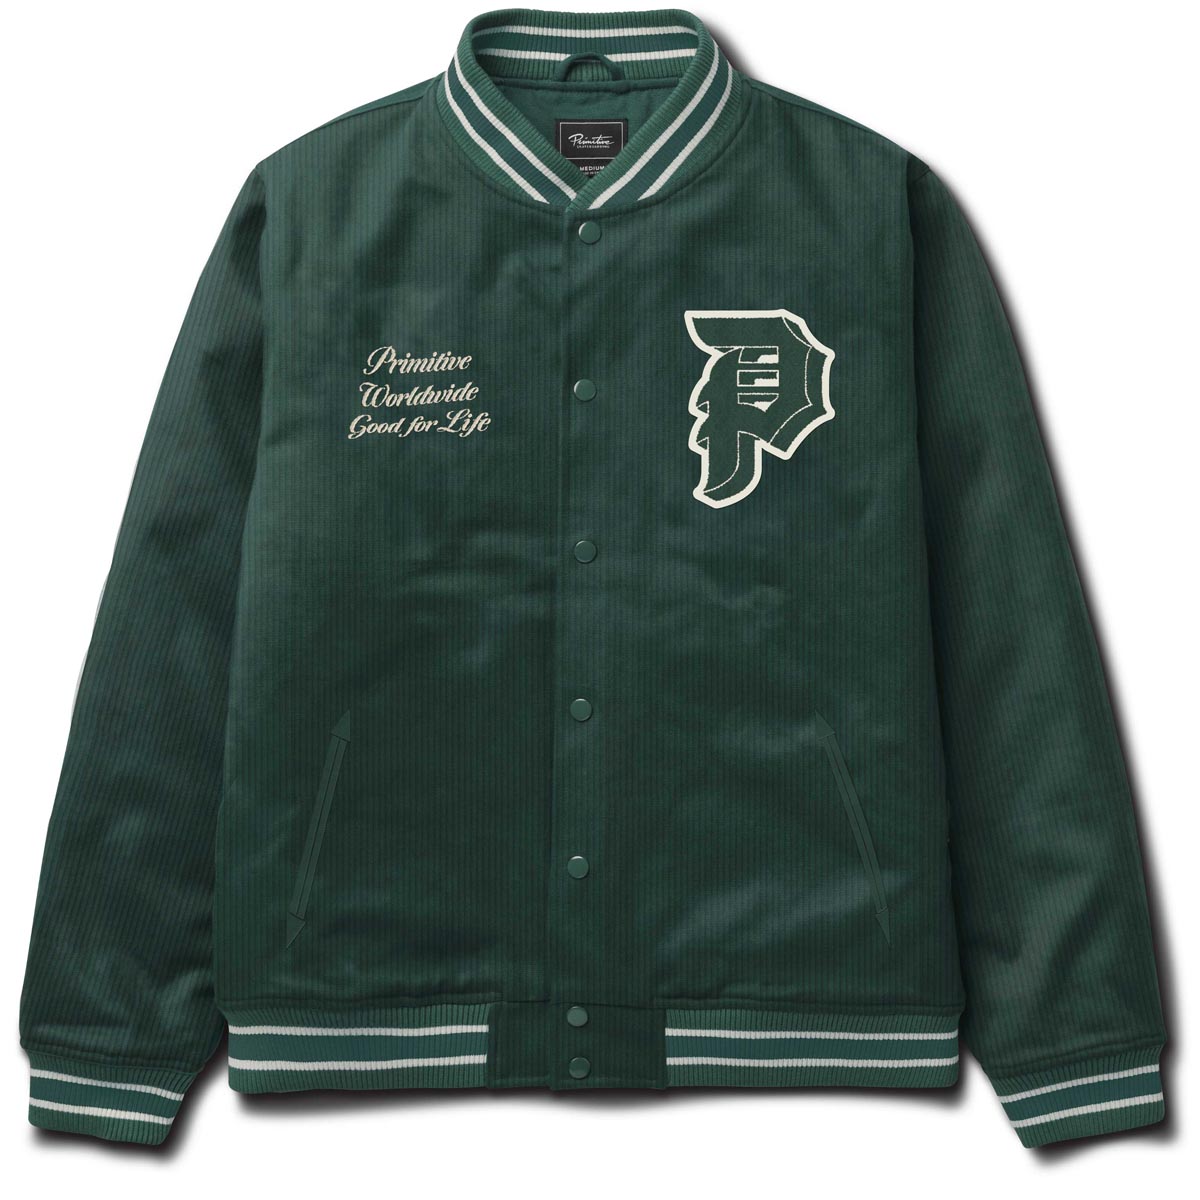 Primitive Bradford Varsity Jacket - Dark Green image 1